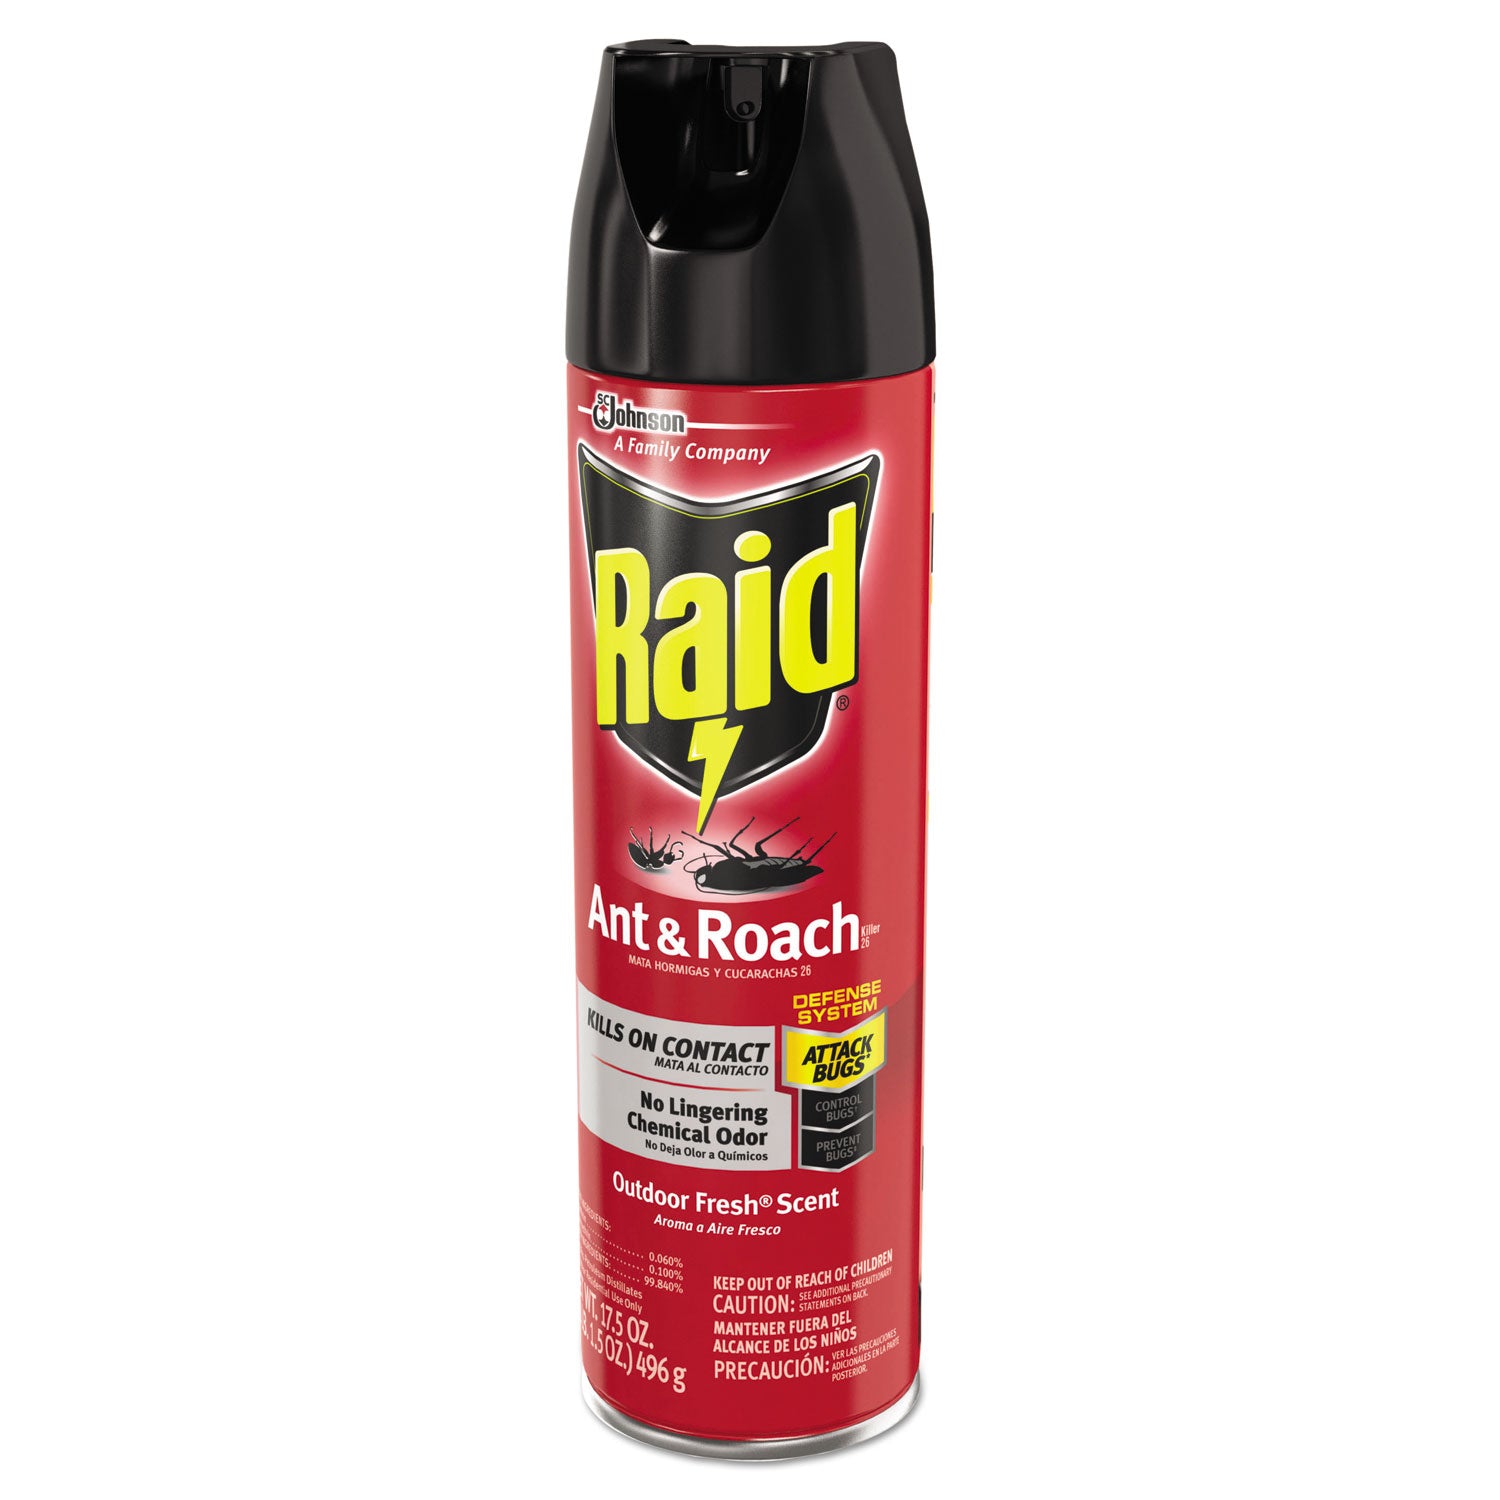 ant-and-roach-killer-175-oz-aerosol-spray-outdoor-fresh_sjn351104ea - 2